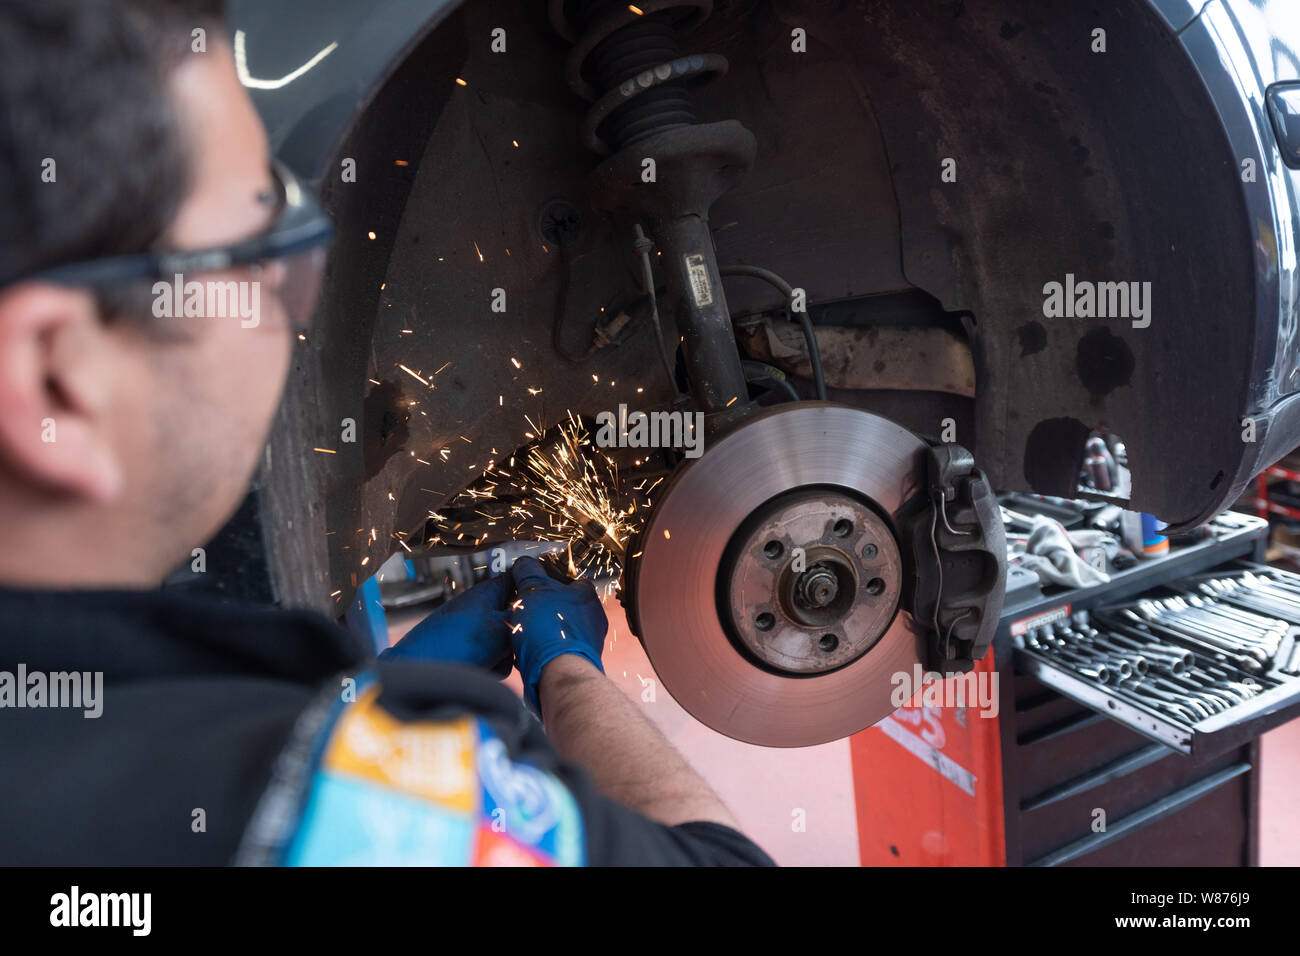 Garage: car mechanics. Mechanic working on a car’s brake discs and pads. Stock Photo